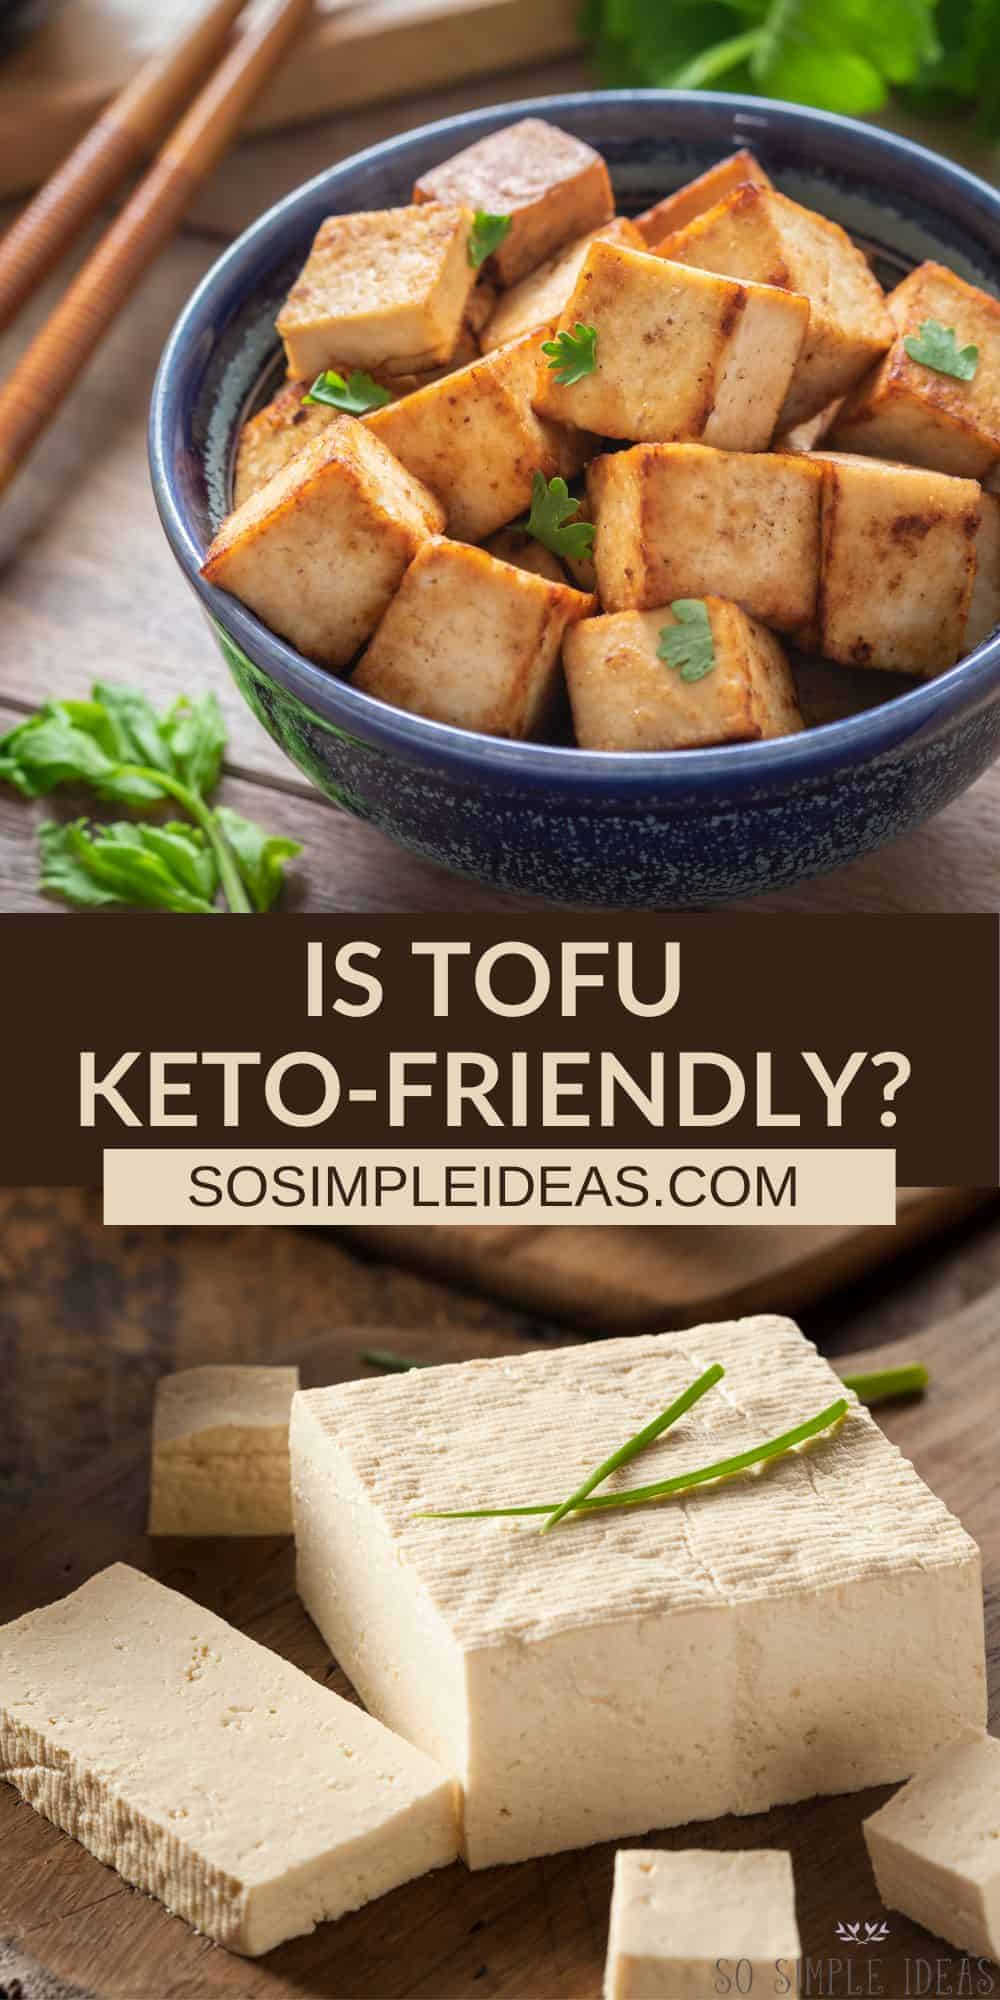 is tofu keto pinterest image.